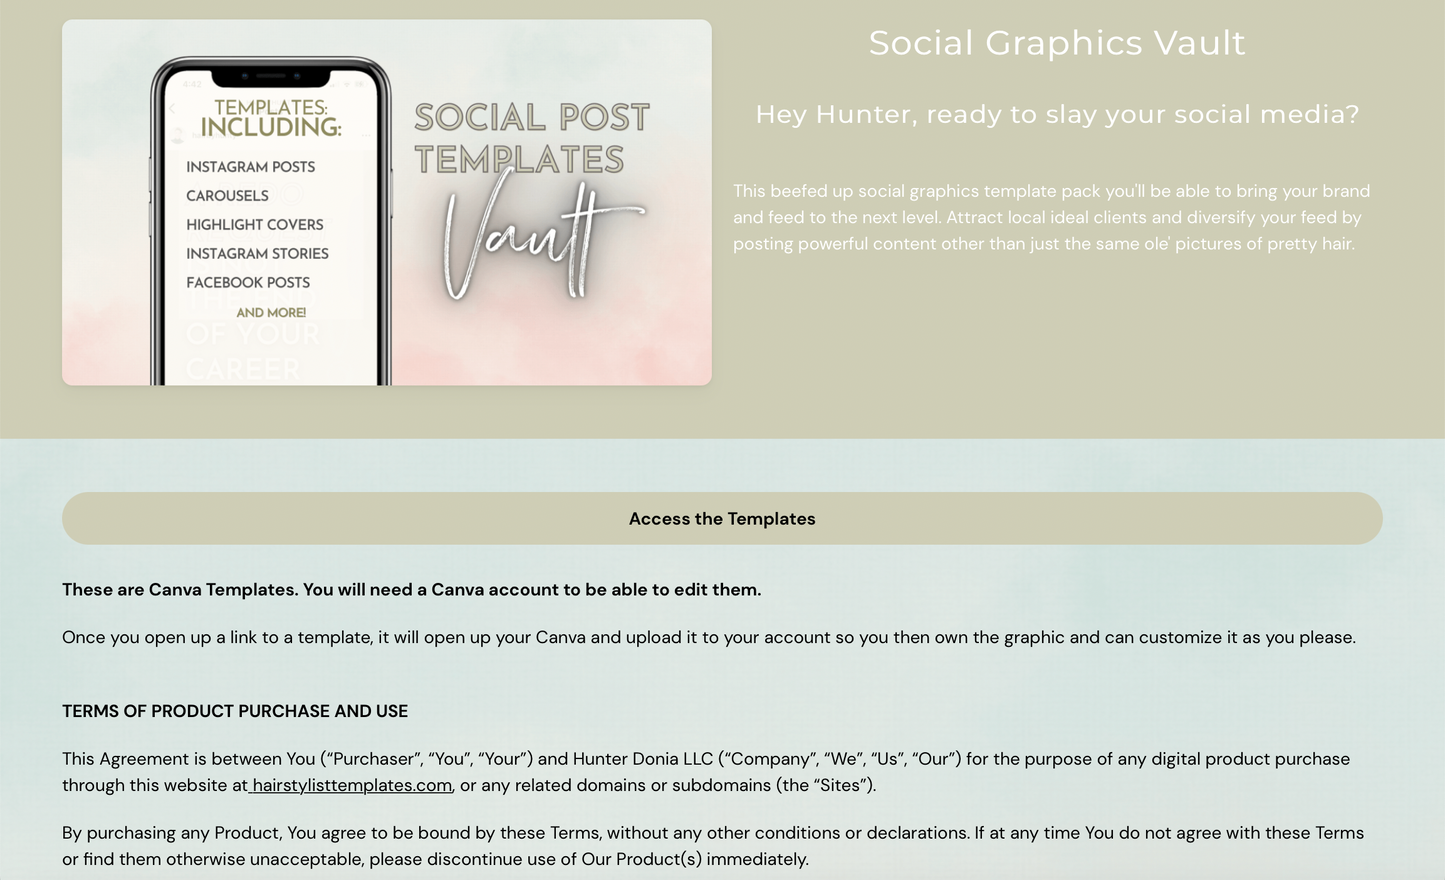 Social Graphics Template Vault